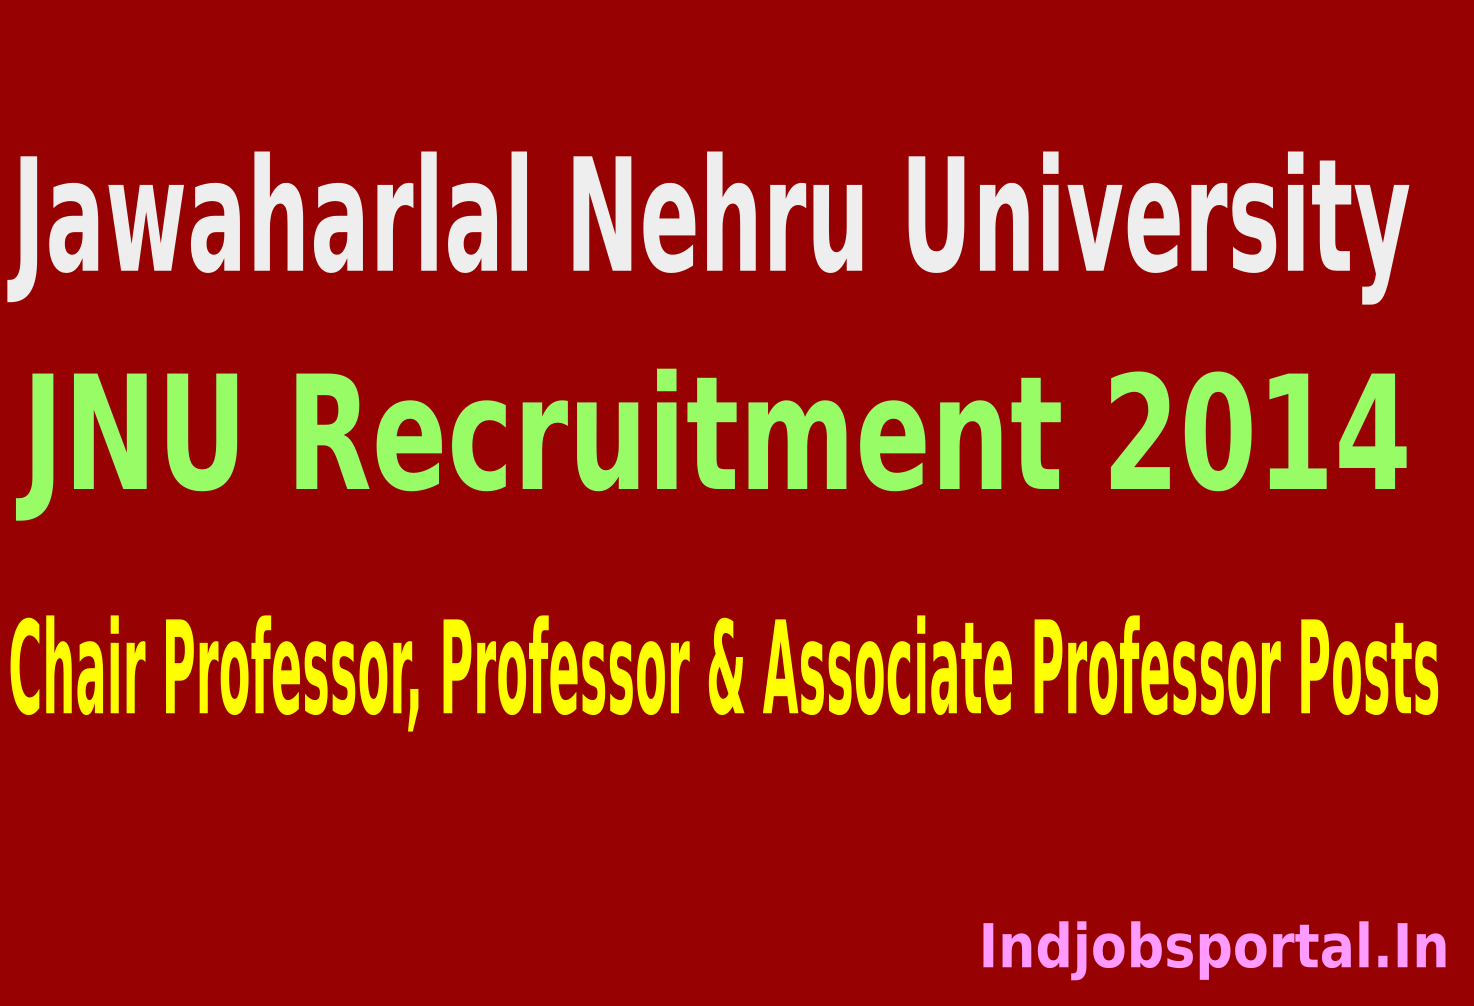 JNU Recruitment 2014 For 75 Chair Professor, Professor & Associate Professor Posts